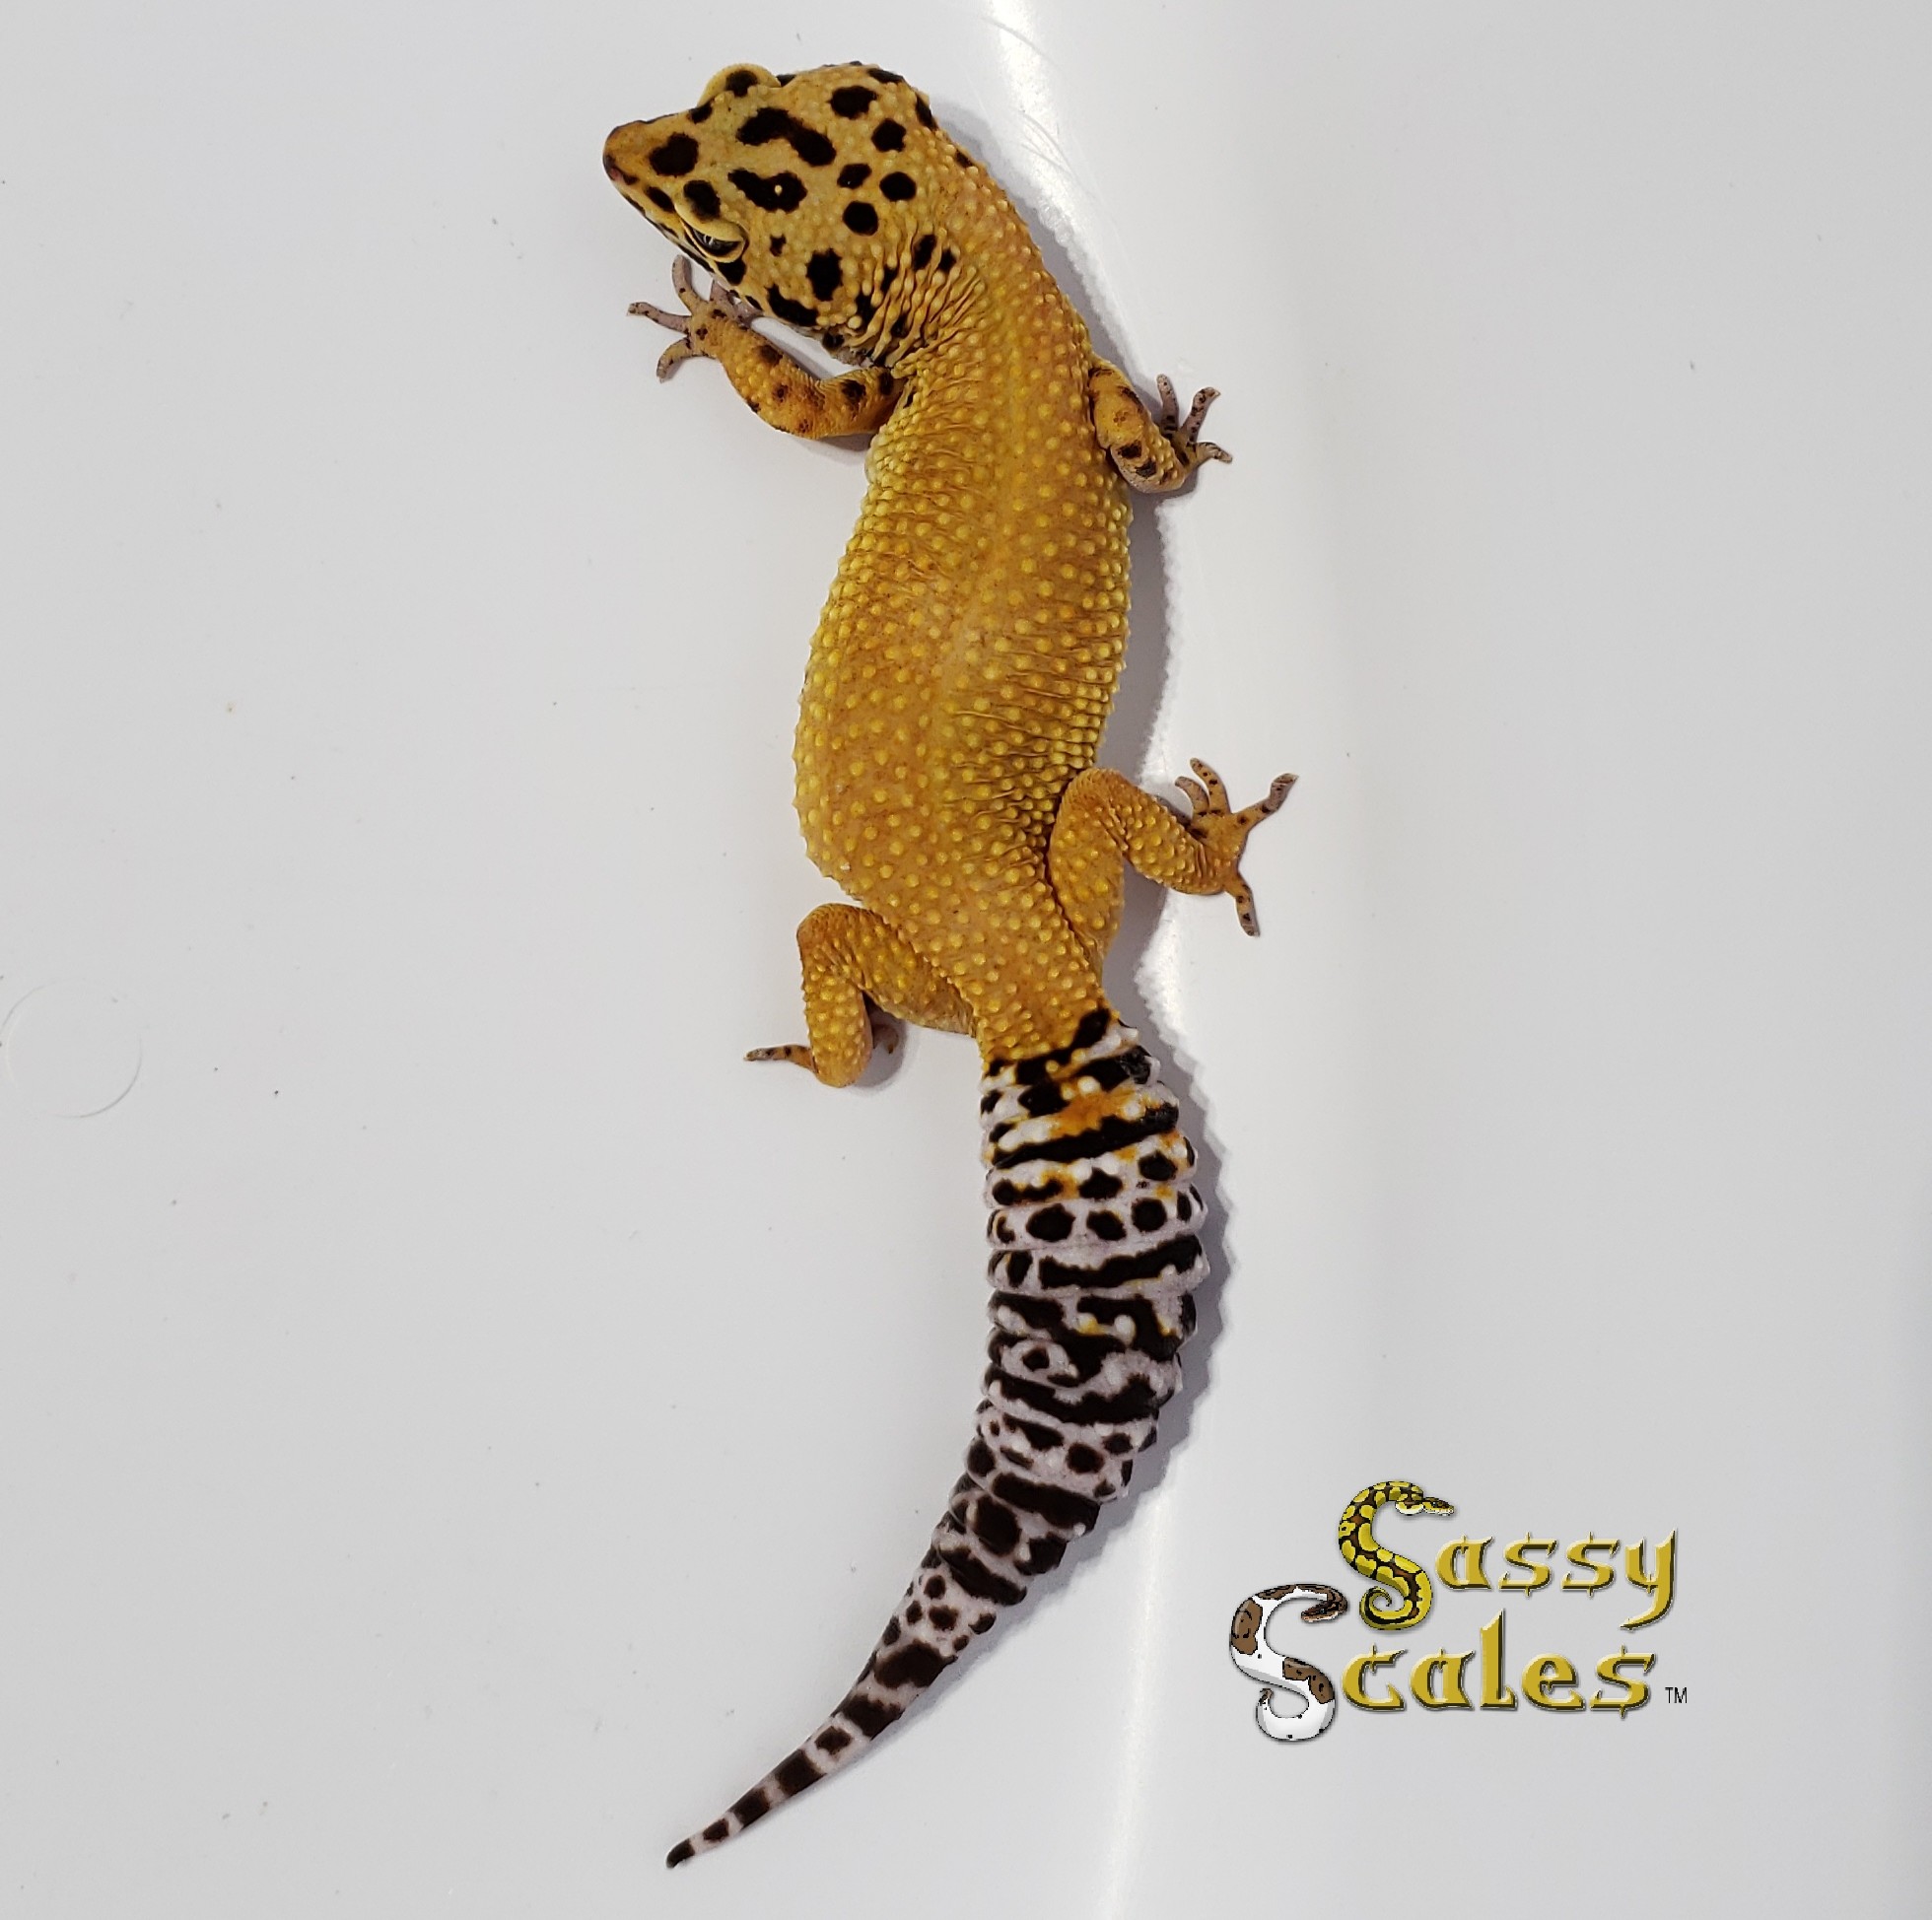 Blood Emerine Leopard Gecko by Sassy Scales